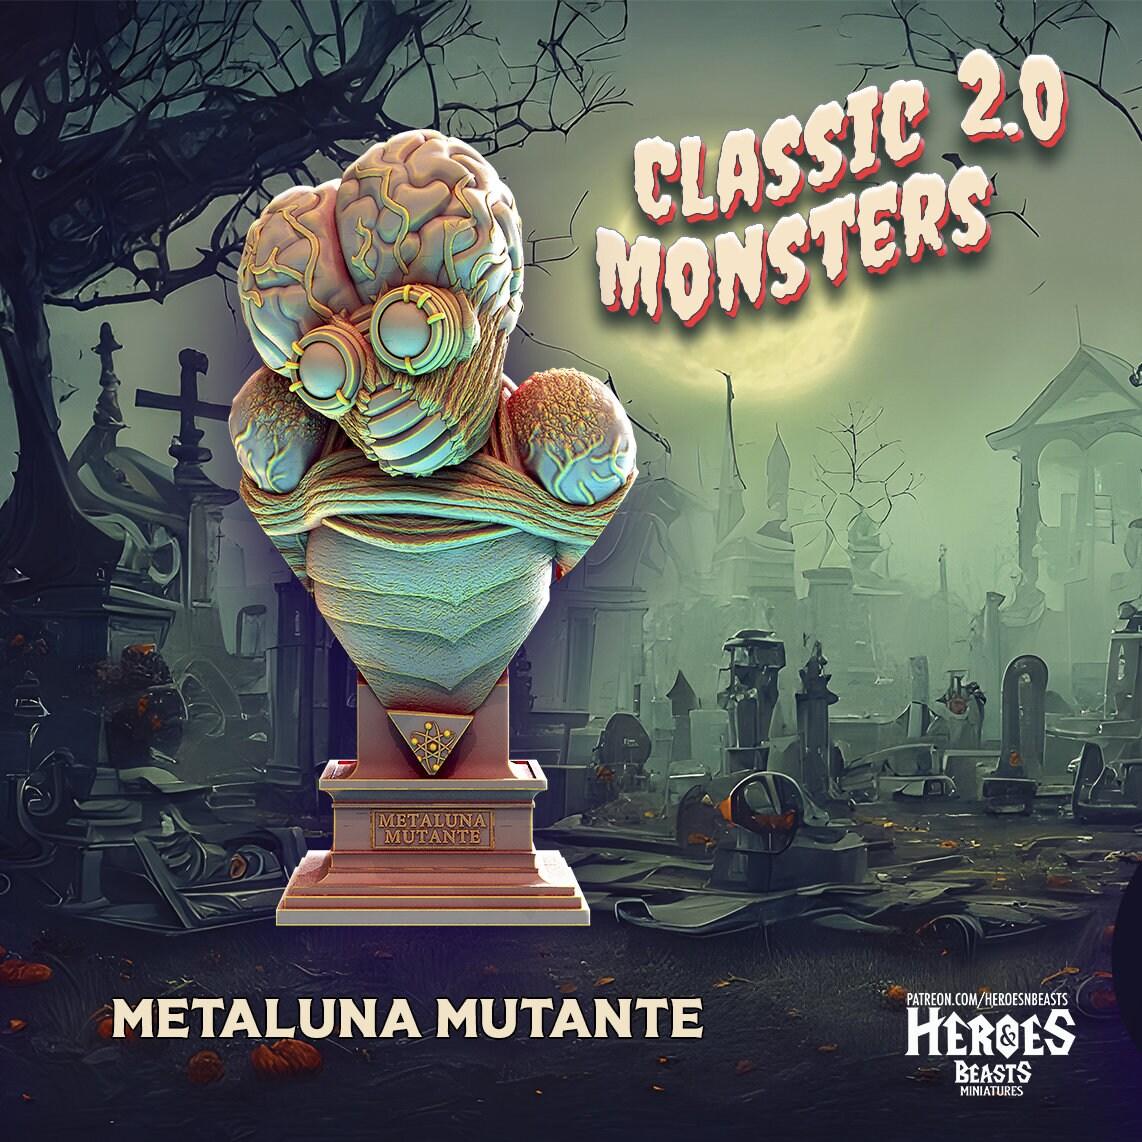 Metaluna Mutante Miniature | Classic Monsters | 32mm 75mm 150mm Bust | DnD Miniature | Dungeons and Dragons DnD 5e Feature Film Theatre - Plague Miniatures shop for DnD Miniatures